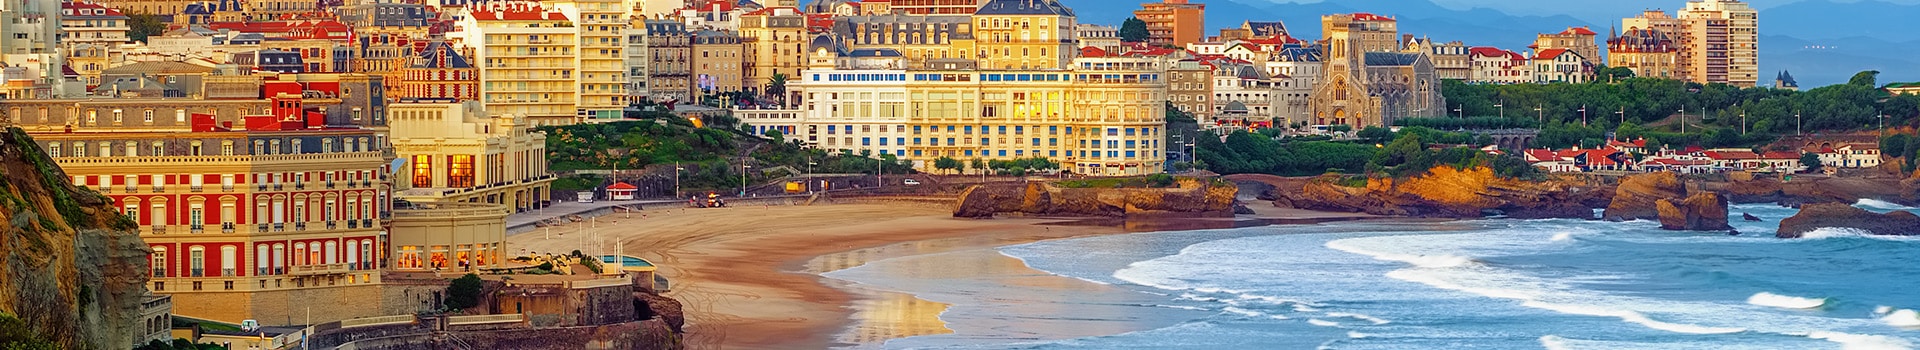 Nice - Biarritz